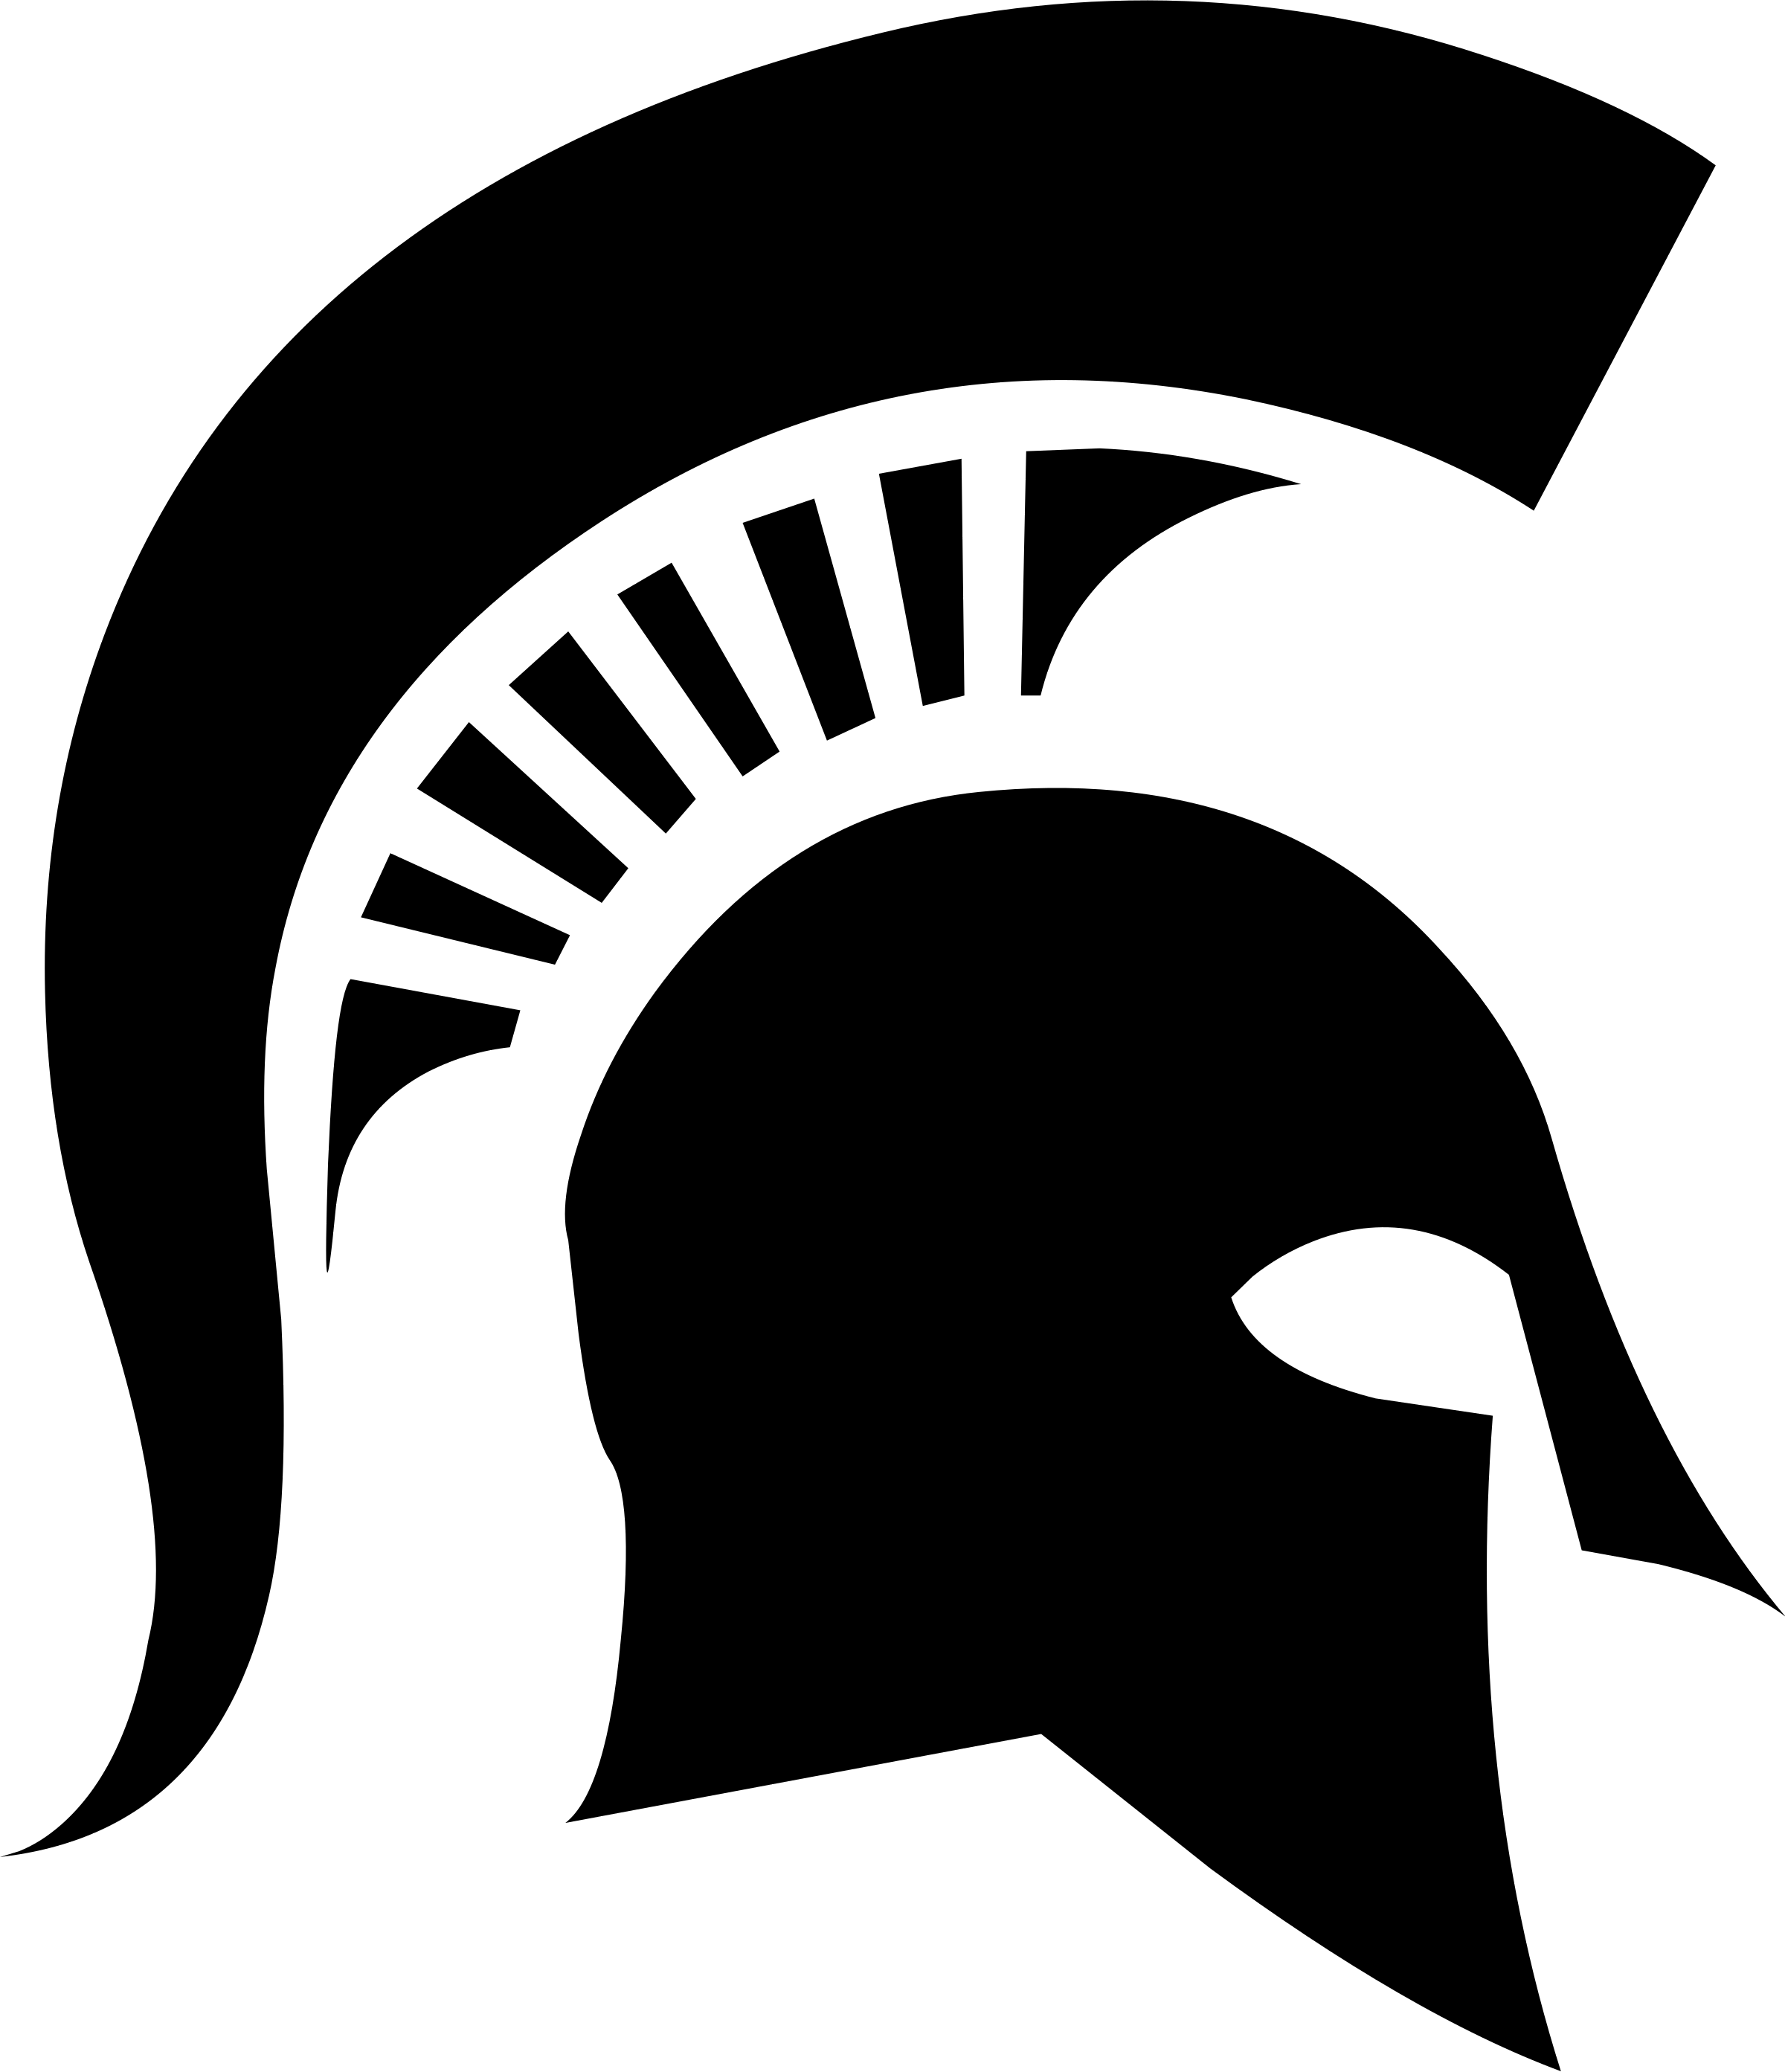 Black and White University of Michigan Logo - Michigan State University Logo PNG Transparent & SVG Vector ...